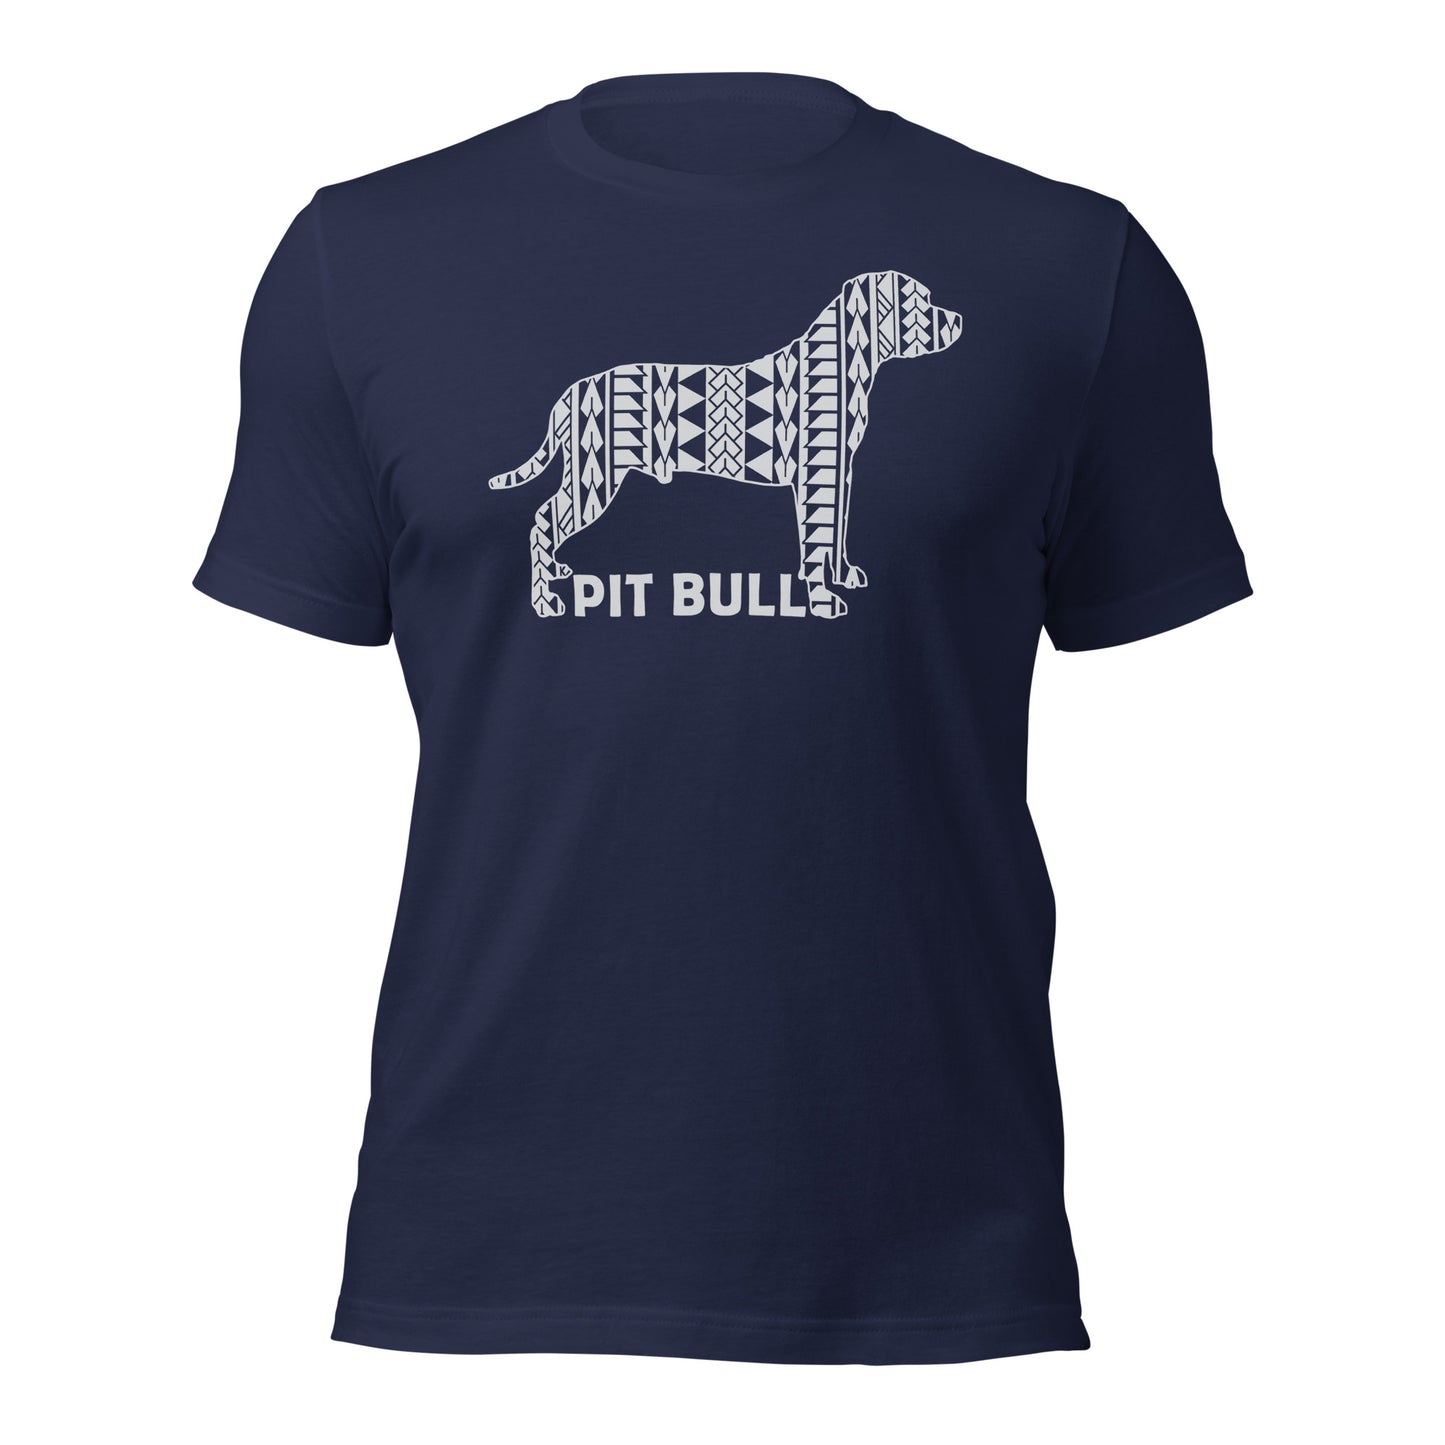 Pit Bull Polynesian t-shirt navy by Dog Artistry.